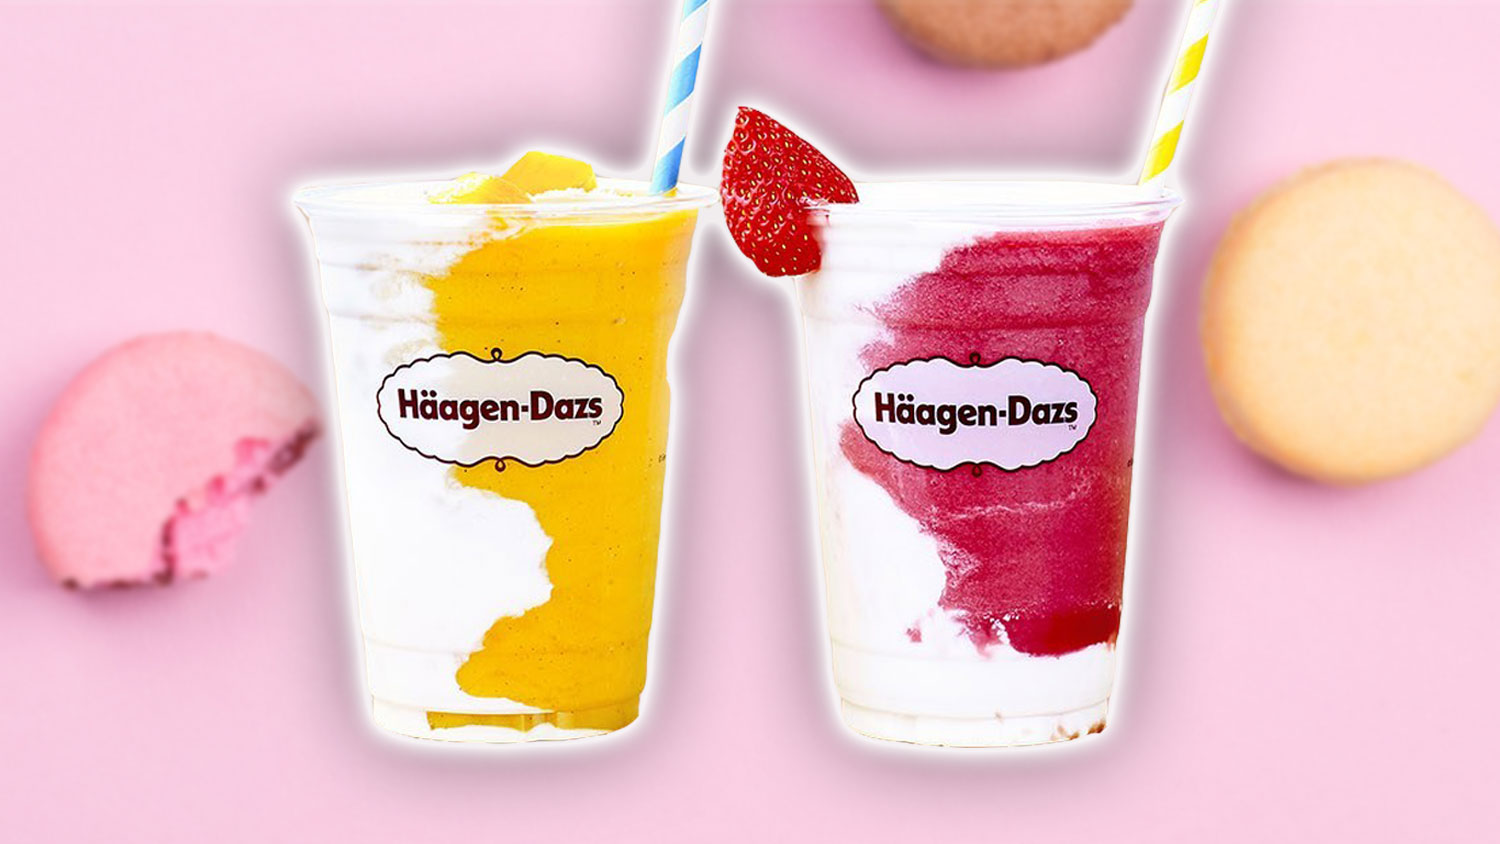 Häagen-Dazs Just Launched the Vegan Milkshakes of the Summer